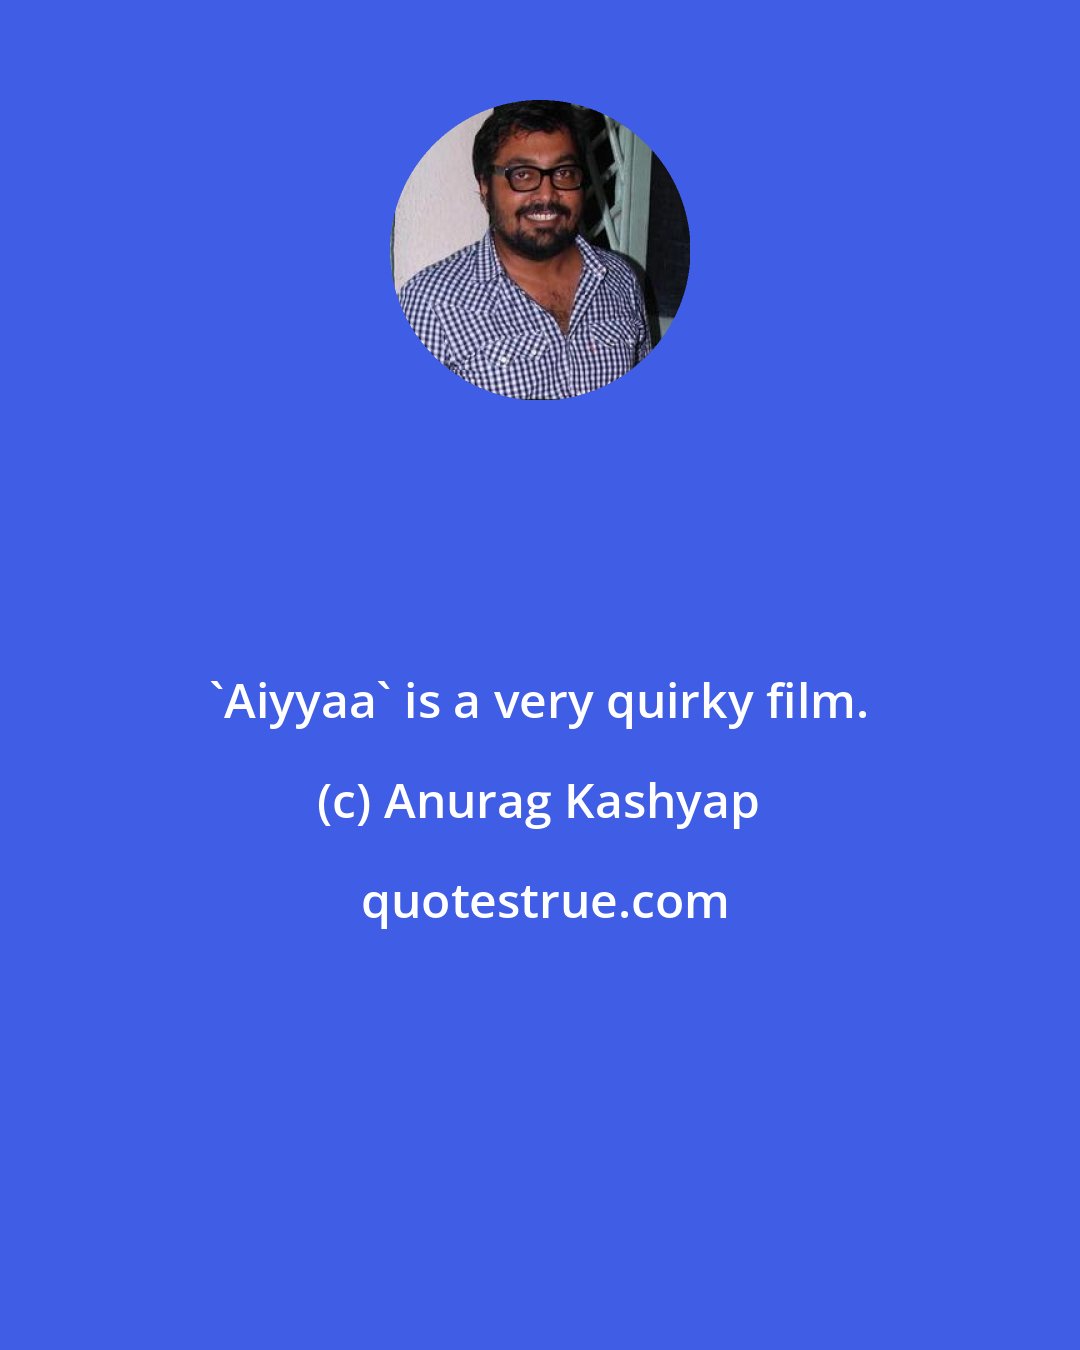 Anurag Kashyap: 'Aiyyaa' is a very quirky film.